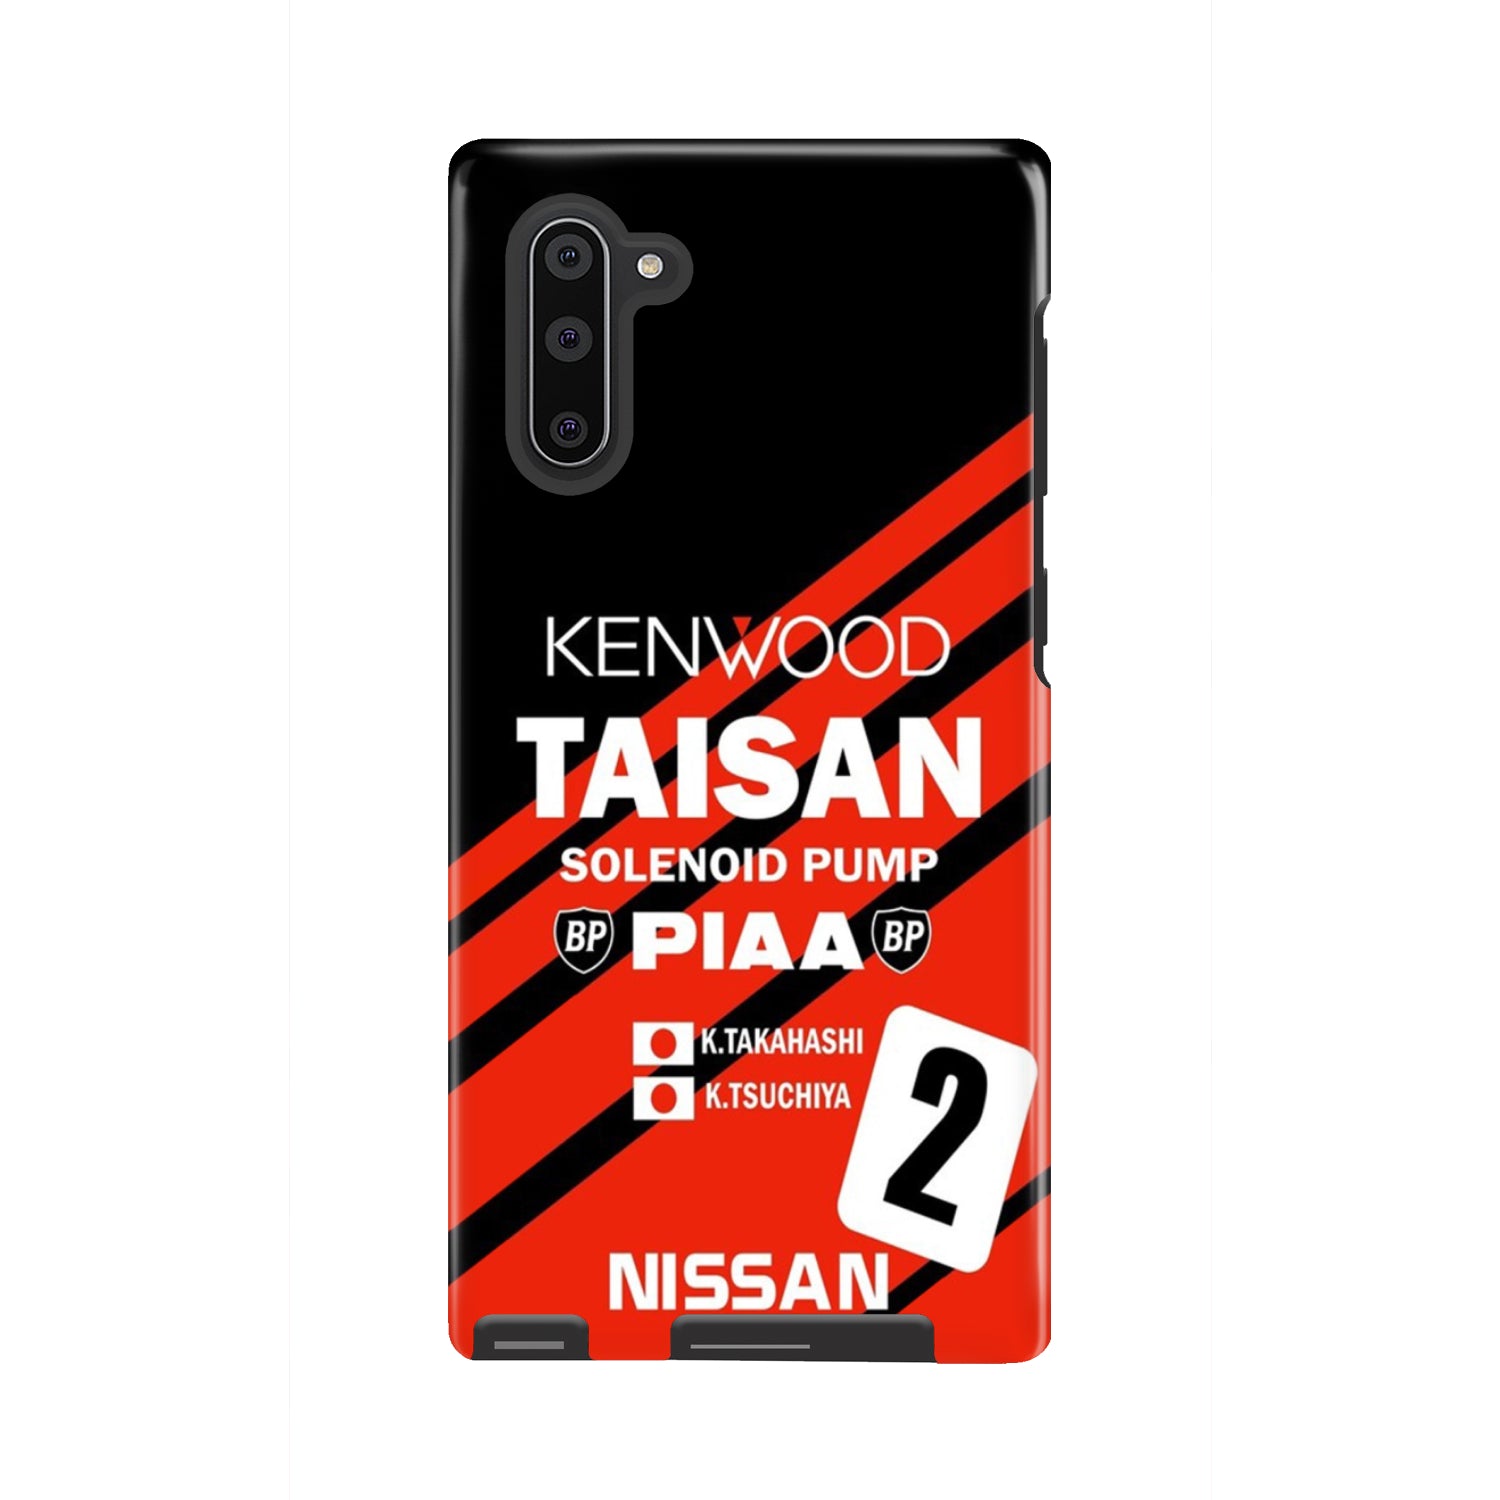 Nissan Kenwood Phone Case